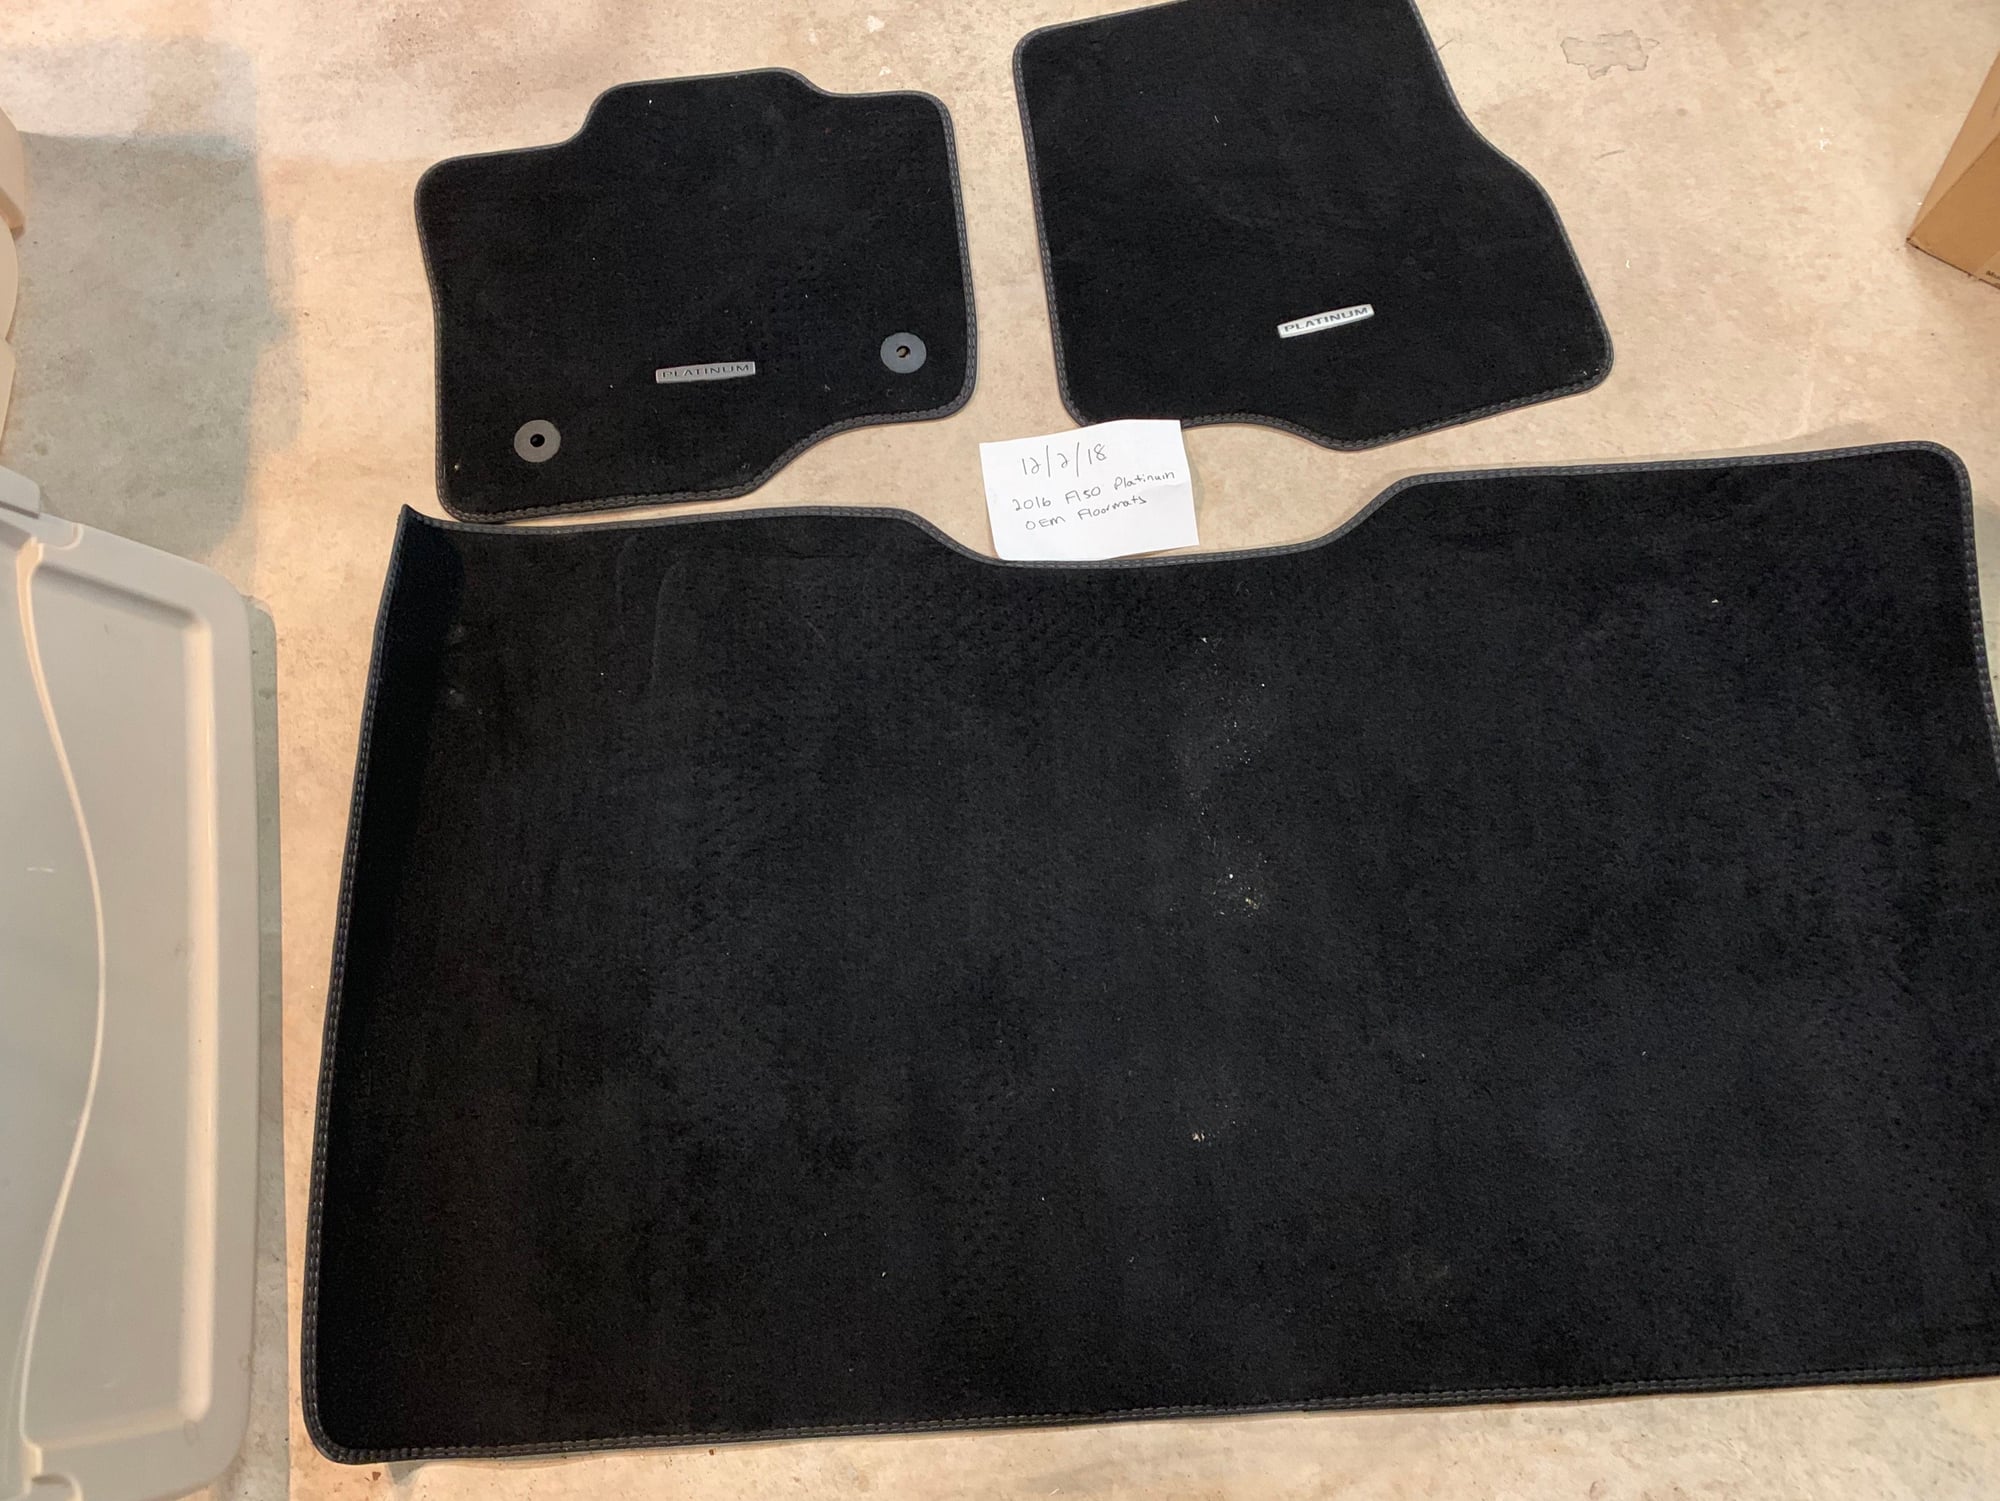 Interior/Upholstery - Platinum F150 floormats OEM (carpet) $90 - New - 2015 to 2018 Ford F-150 - Houston, TX 77095, United States